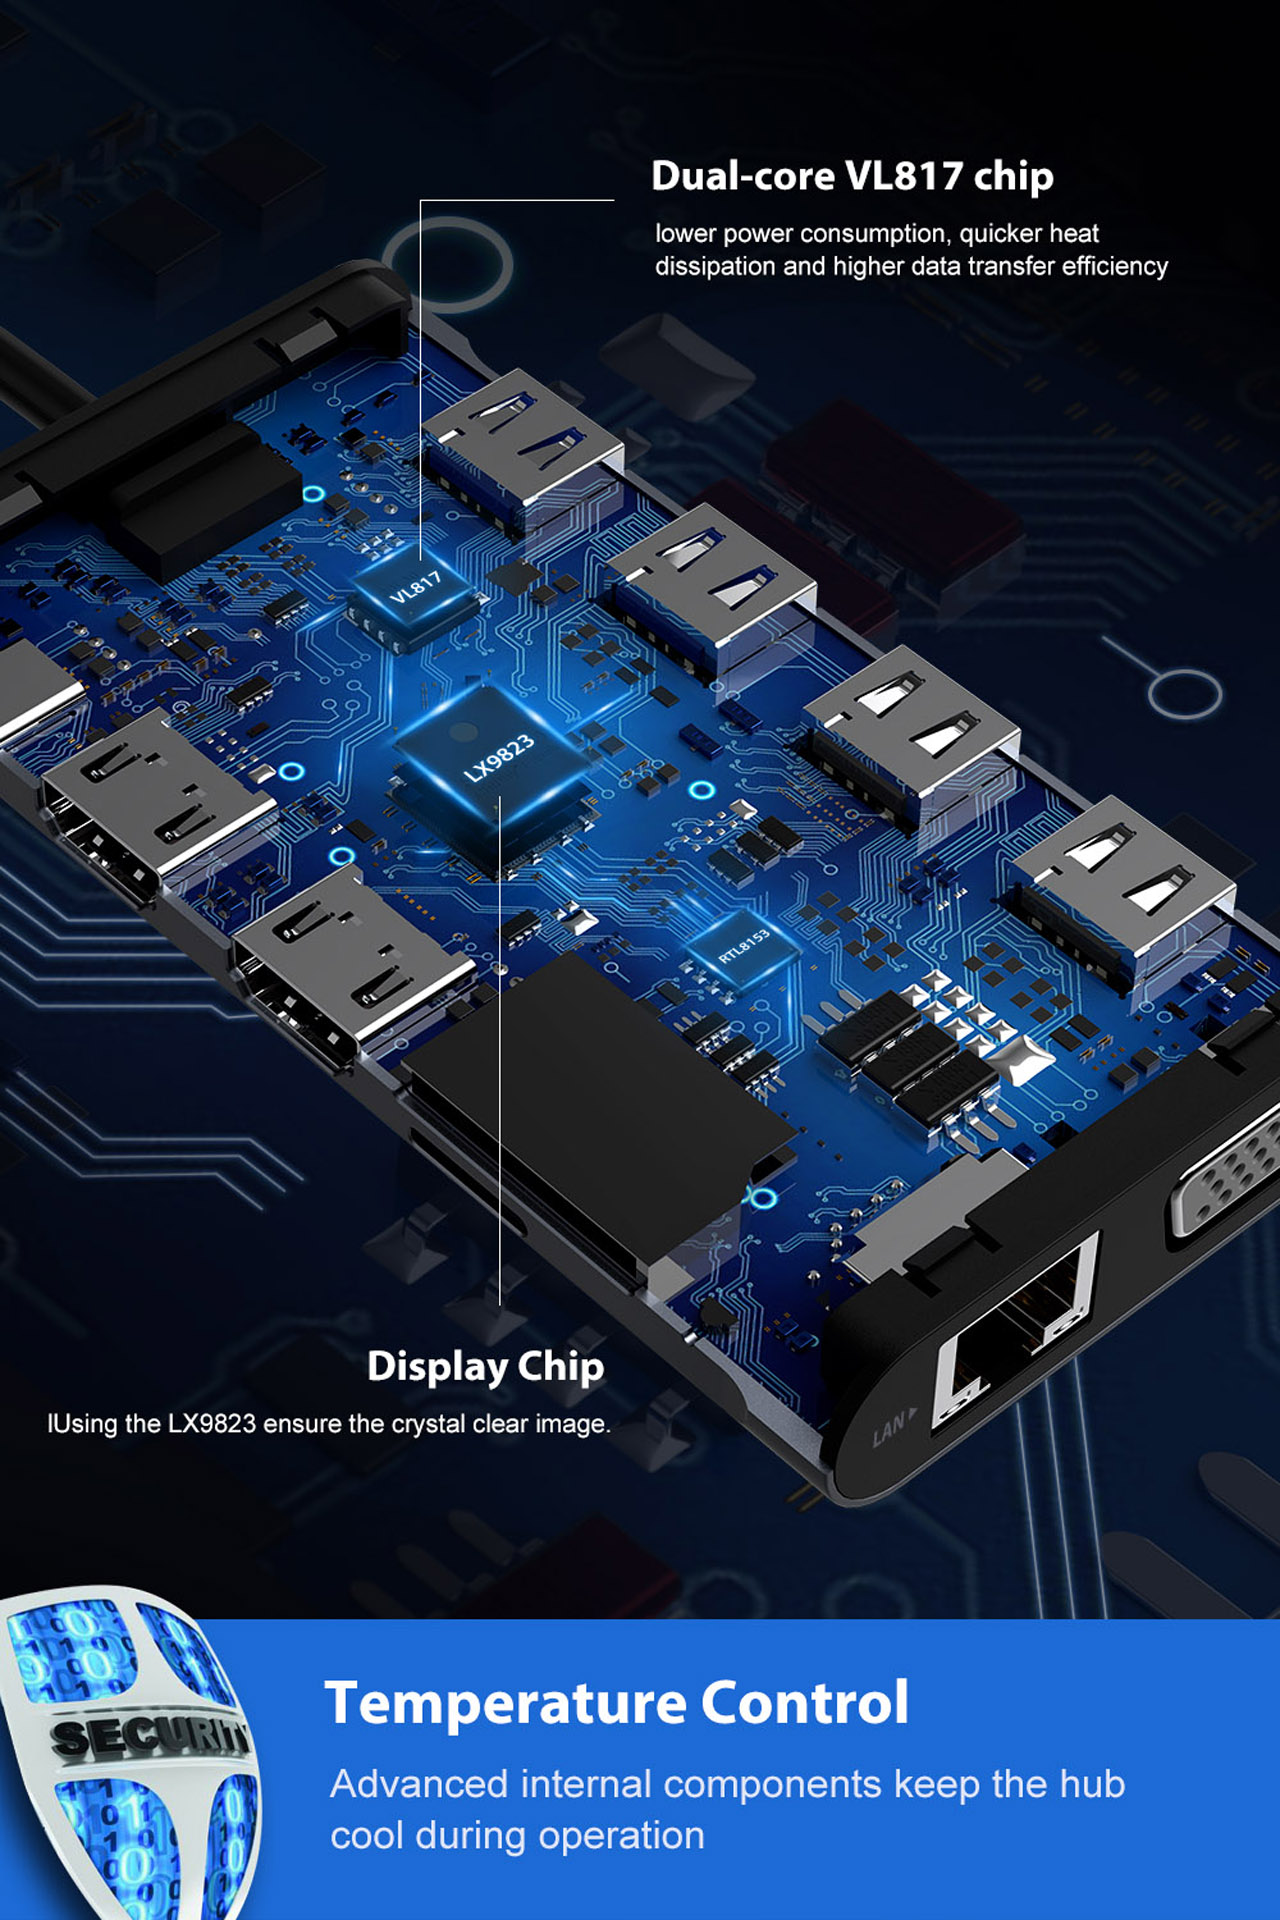 USB C Hub Triple Display- 2019 Latest 11 in 1 USB C Adapter